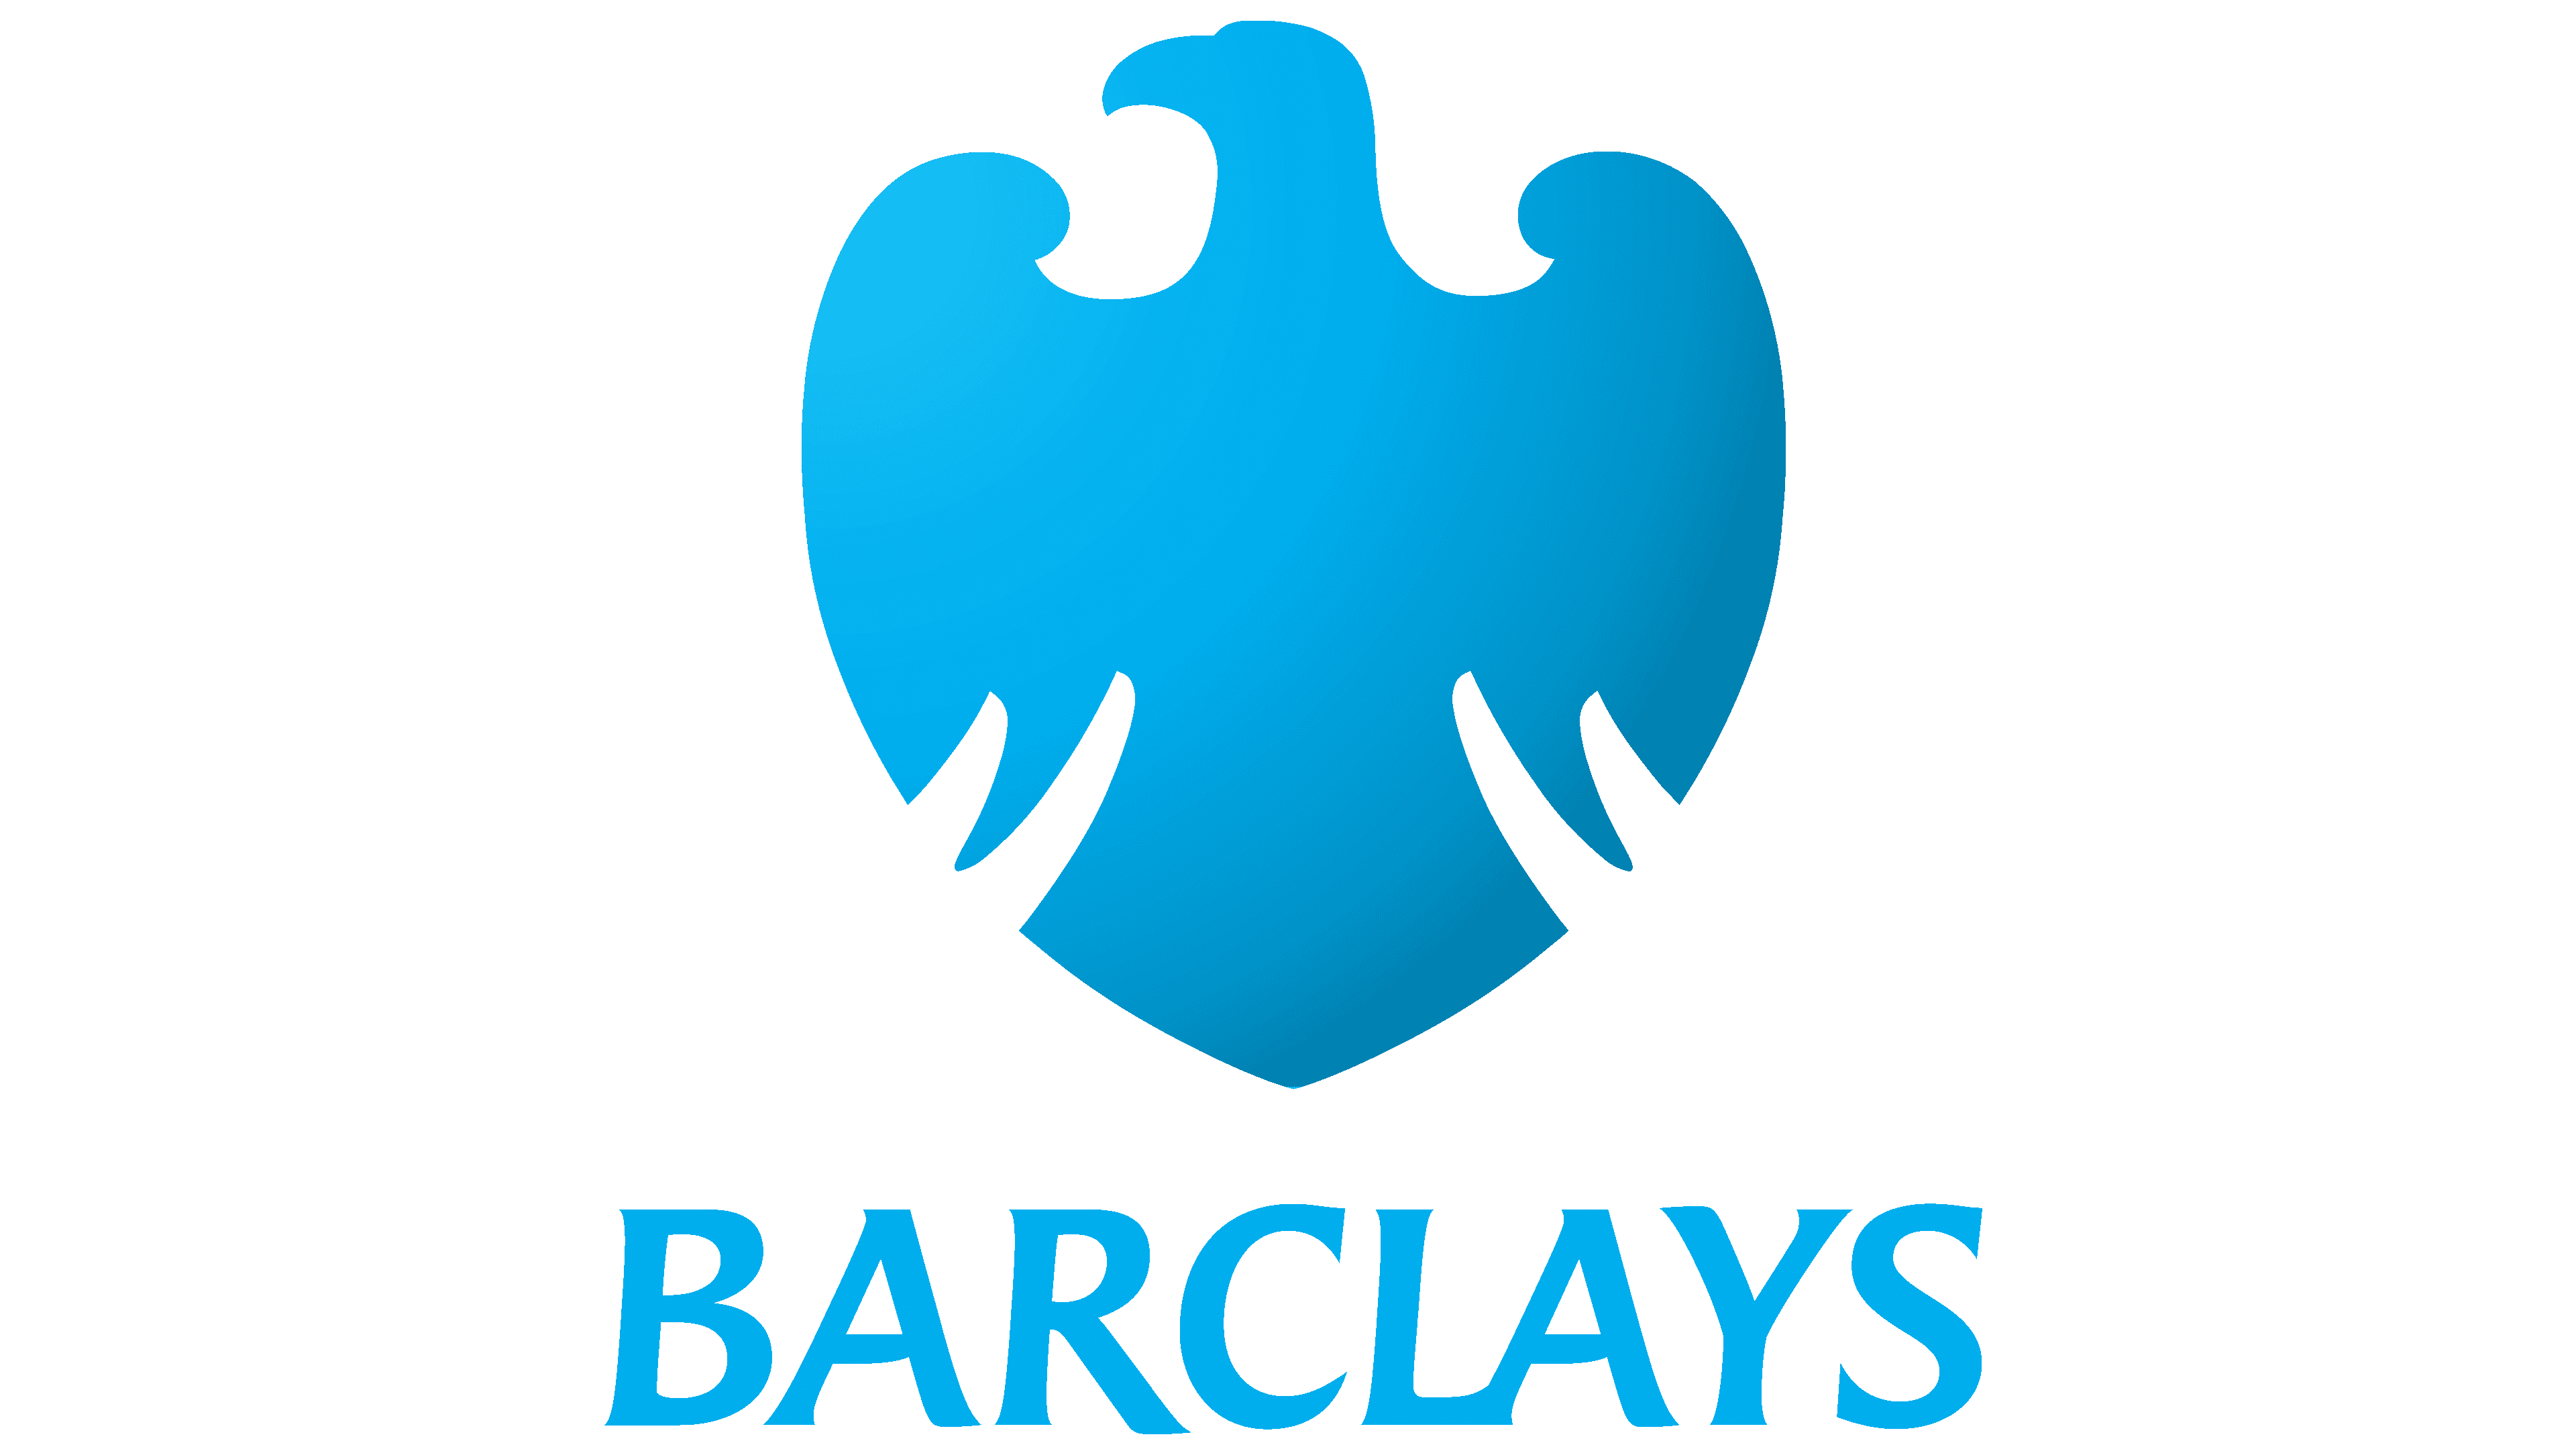 barclays logo vector